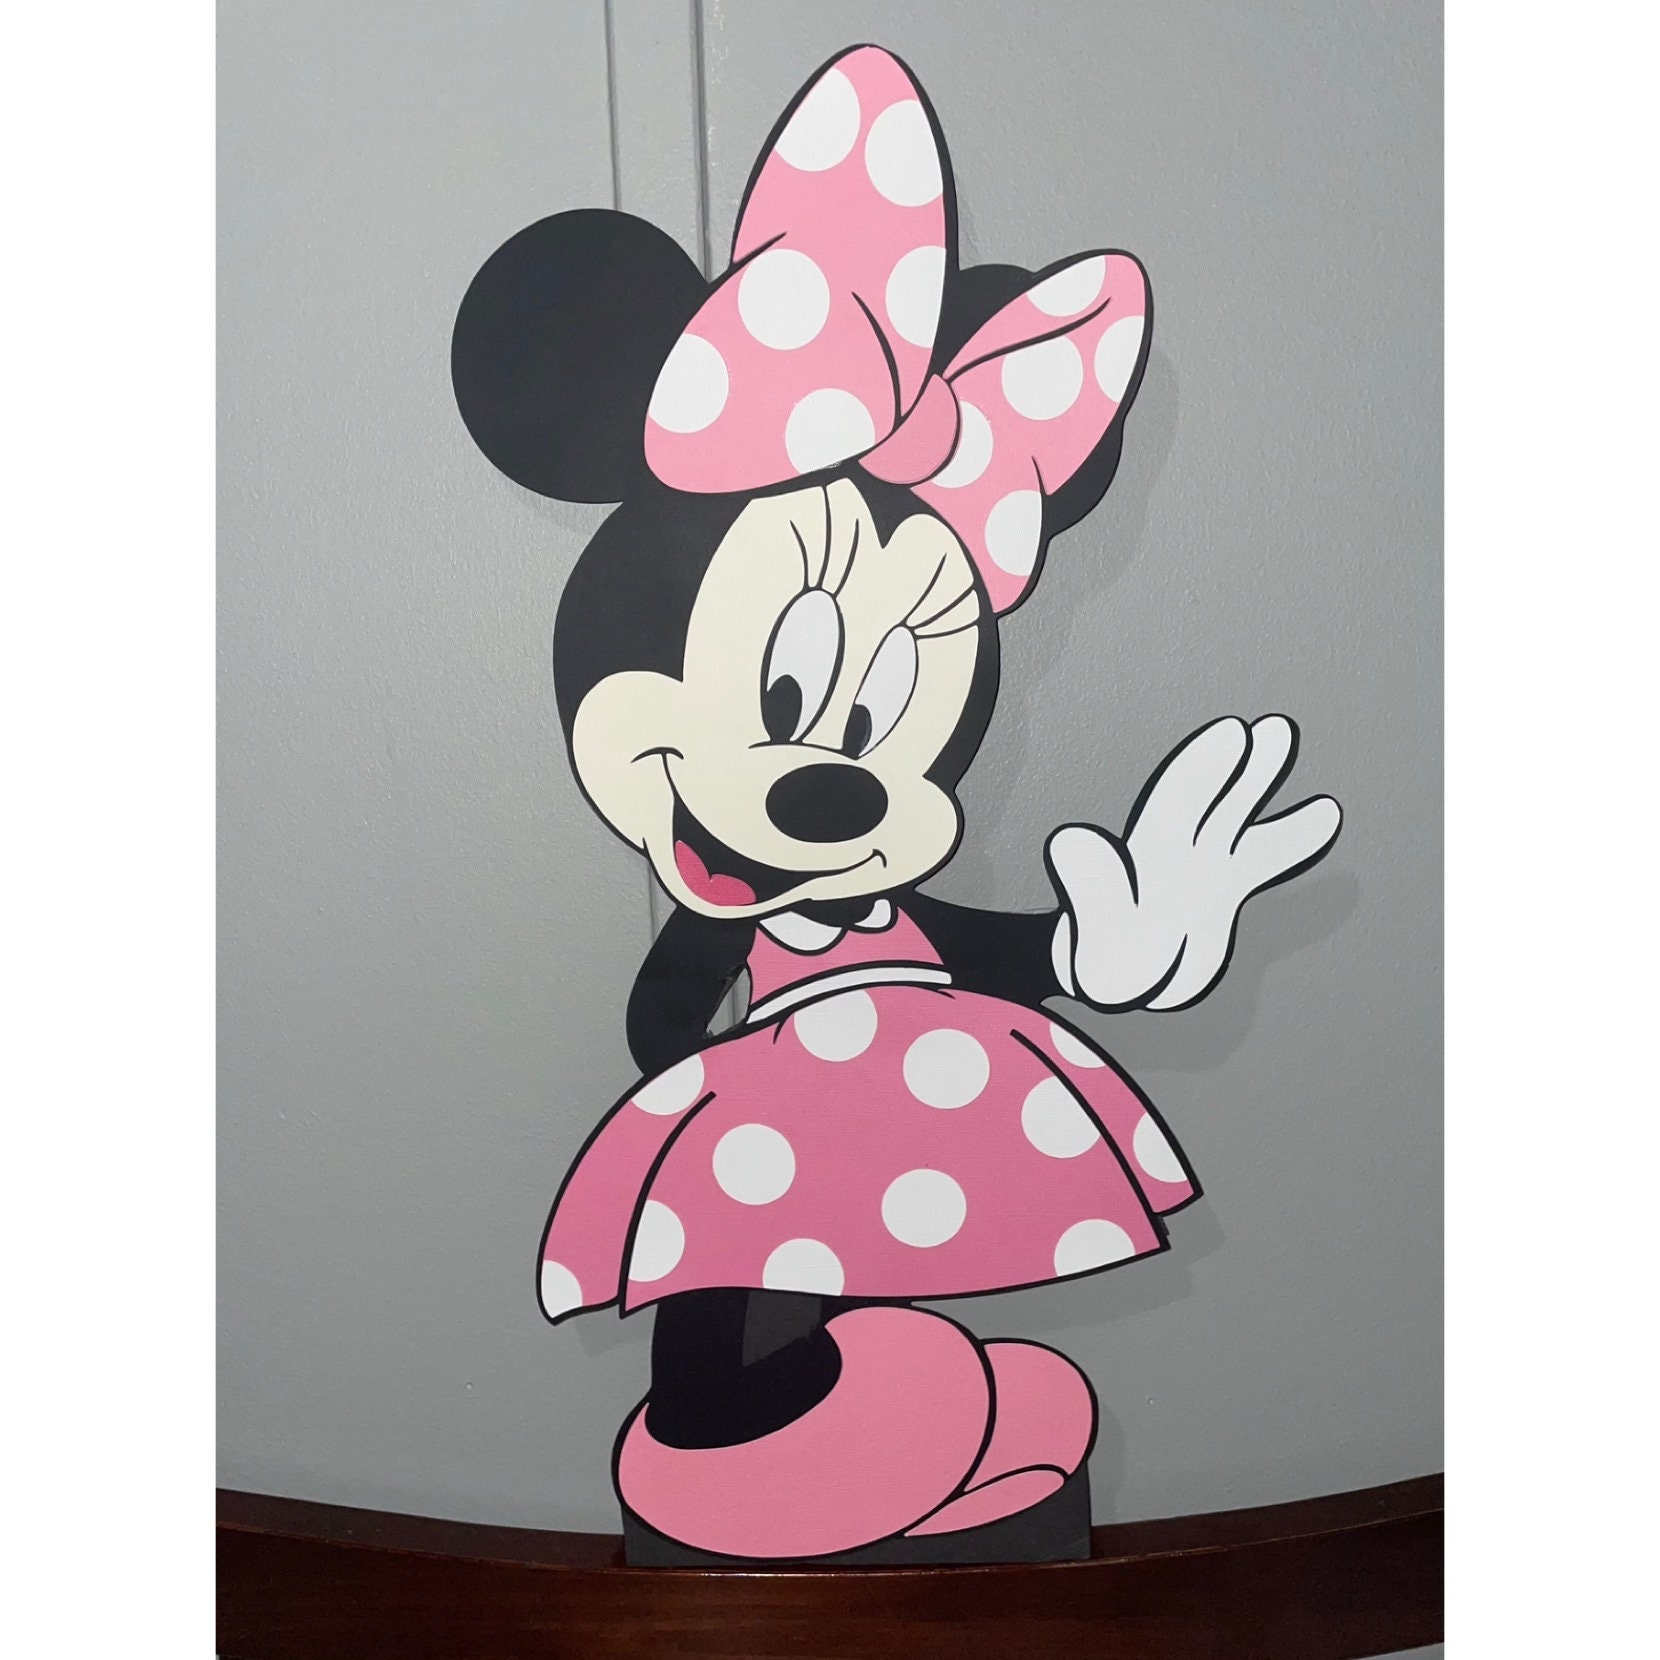 Mickey and Minnie Mouse Lifesize Yard Art, Birthday Decorations 